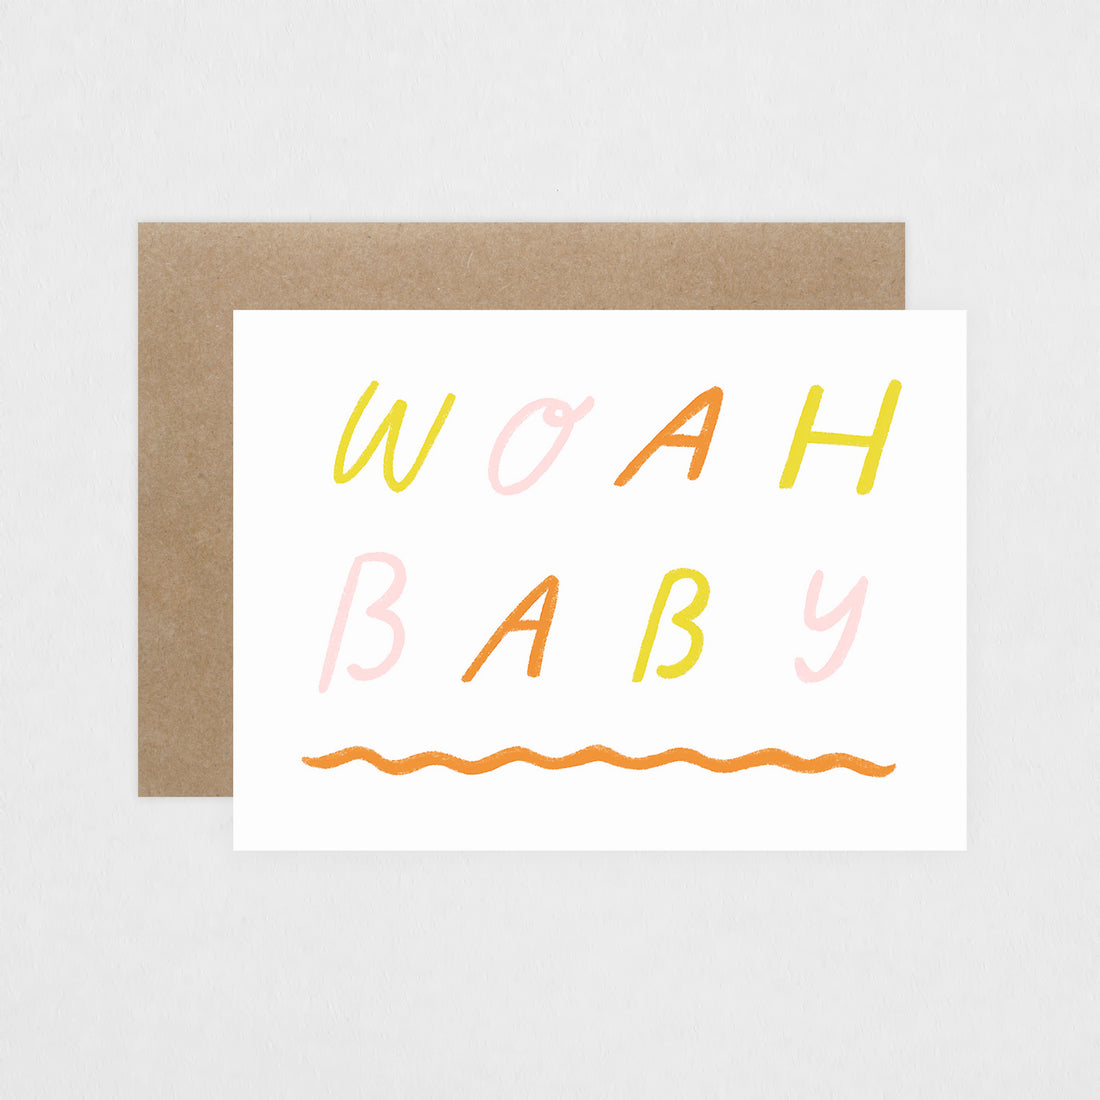 Laura Supnik Whoa Baby Greeting Card 